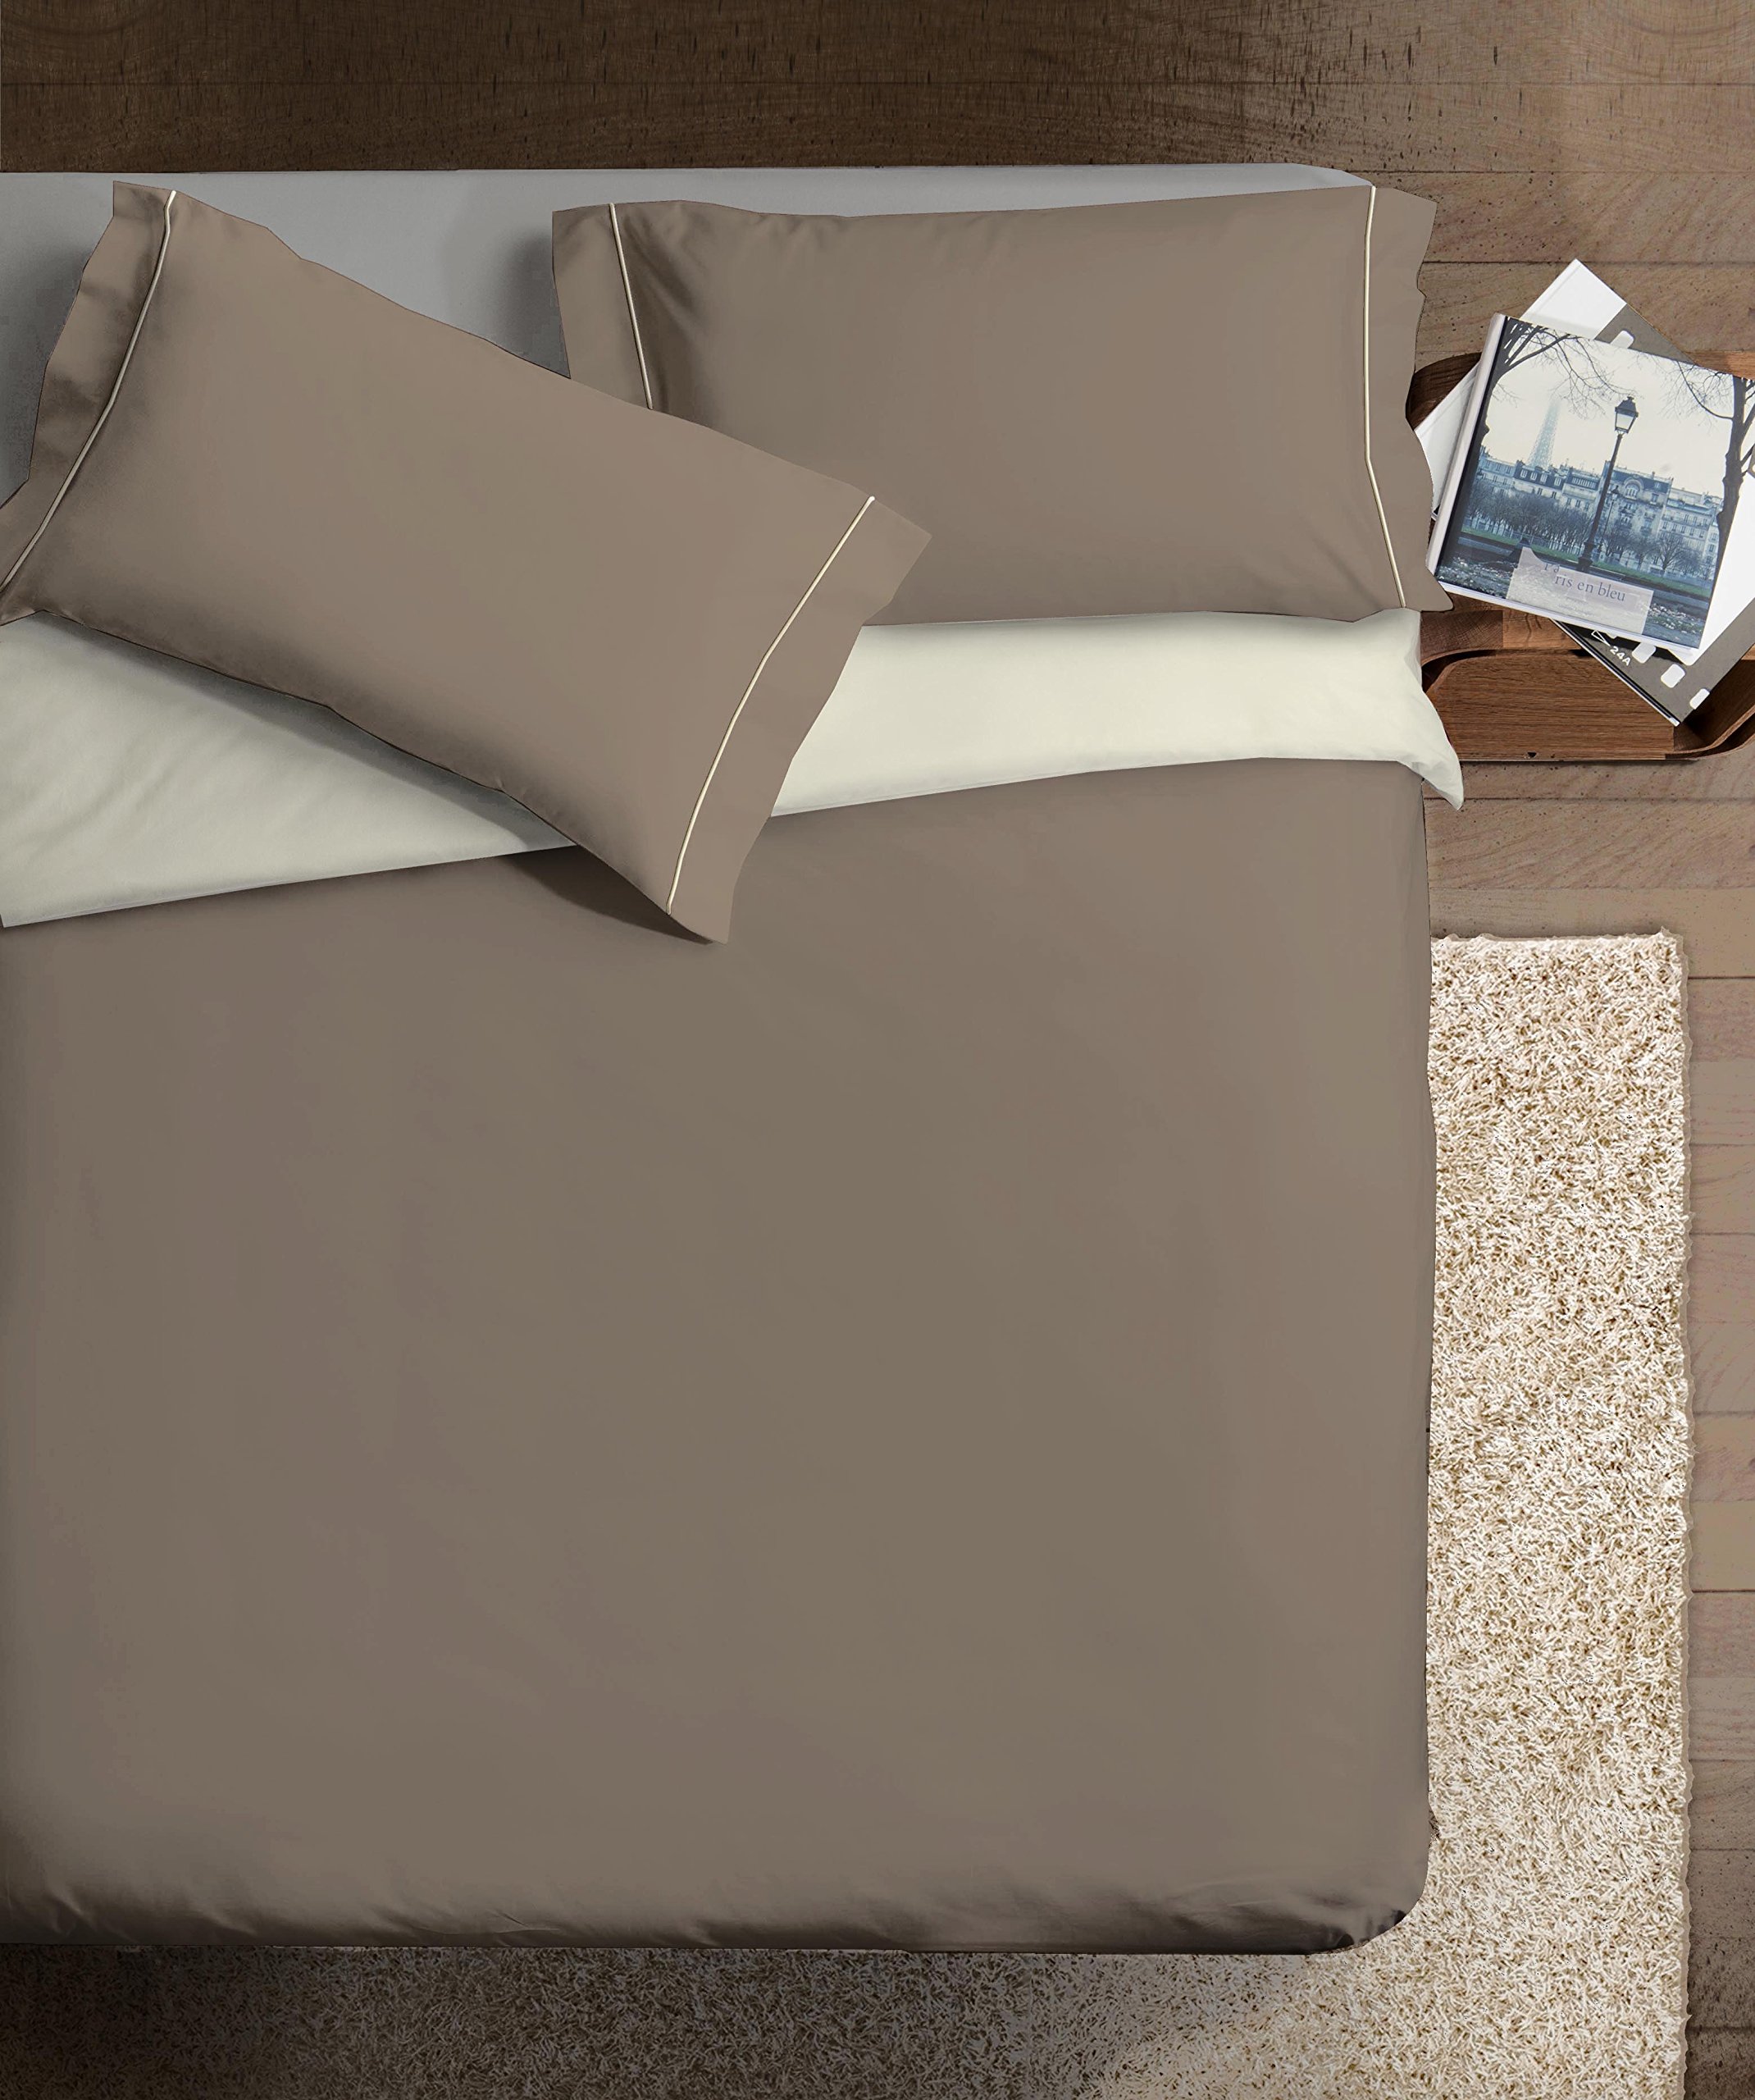 Ipersan zweifarbig Bettbezug Taubengrau/beige cm. 255x240